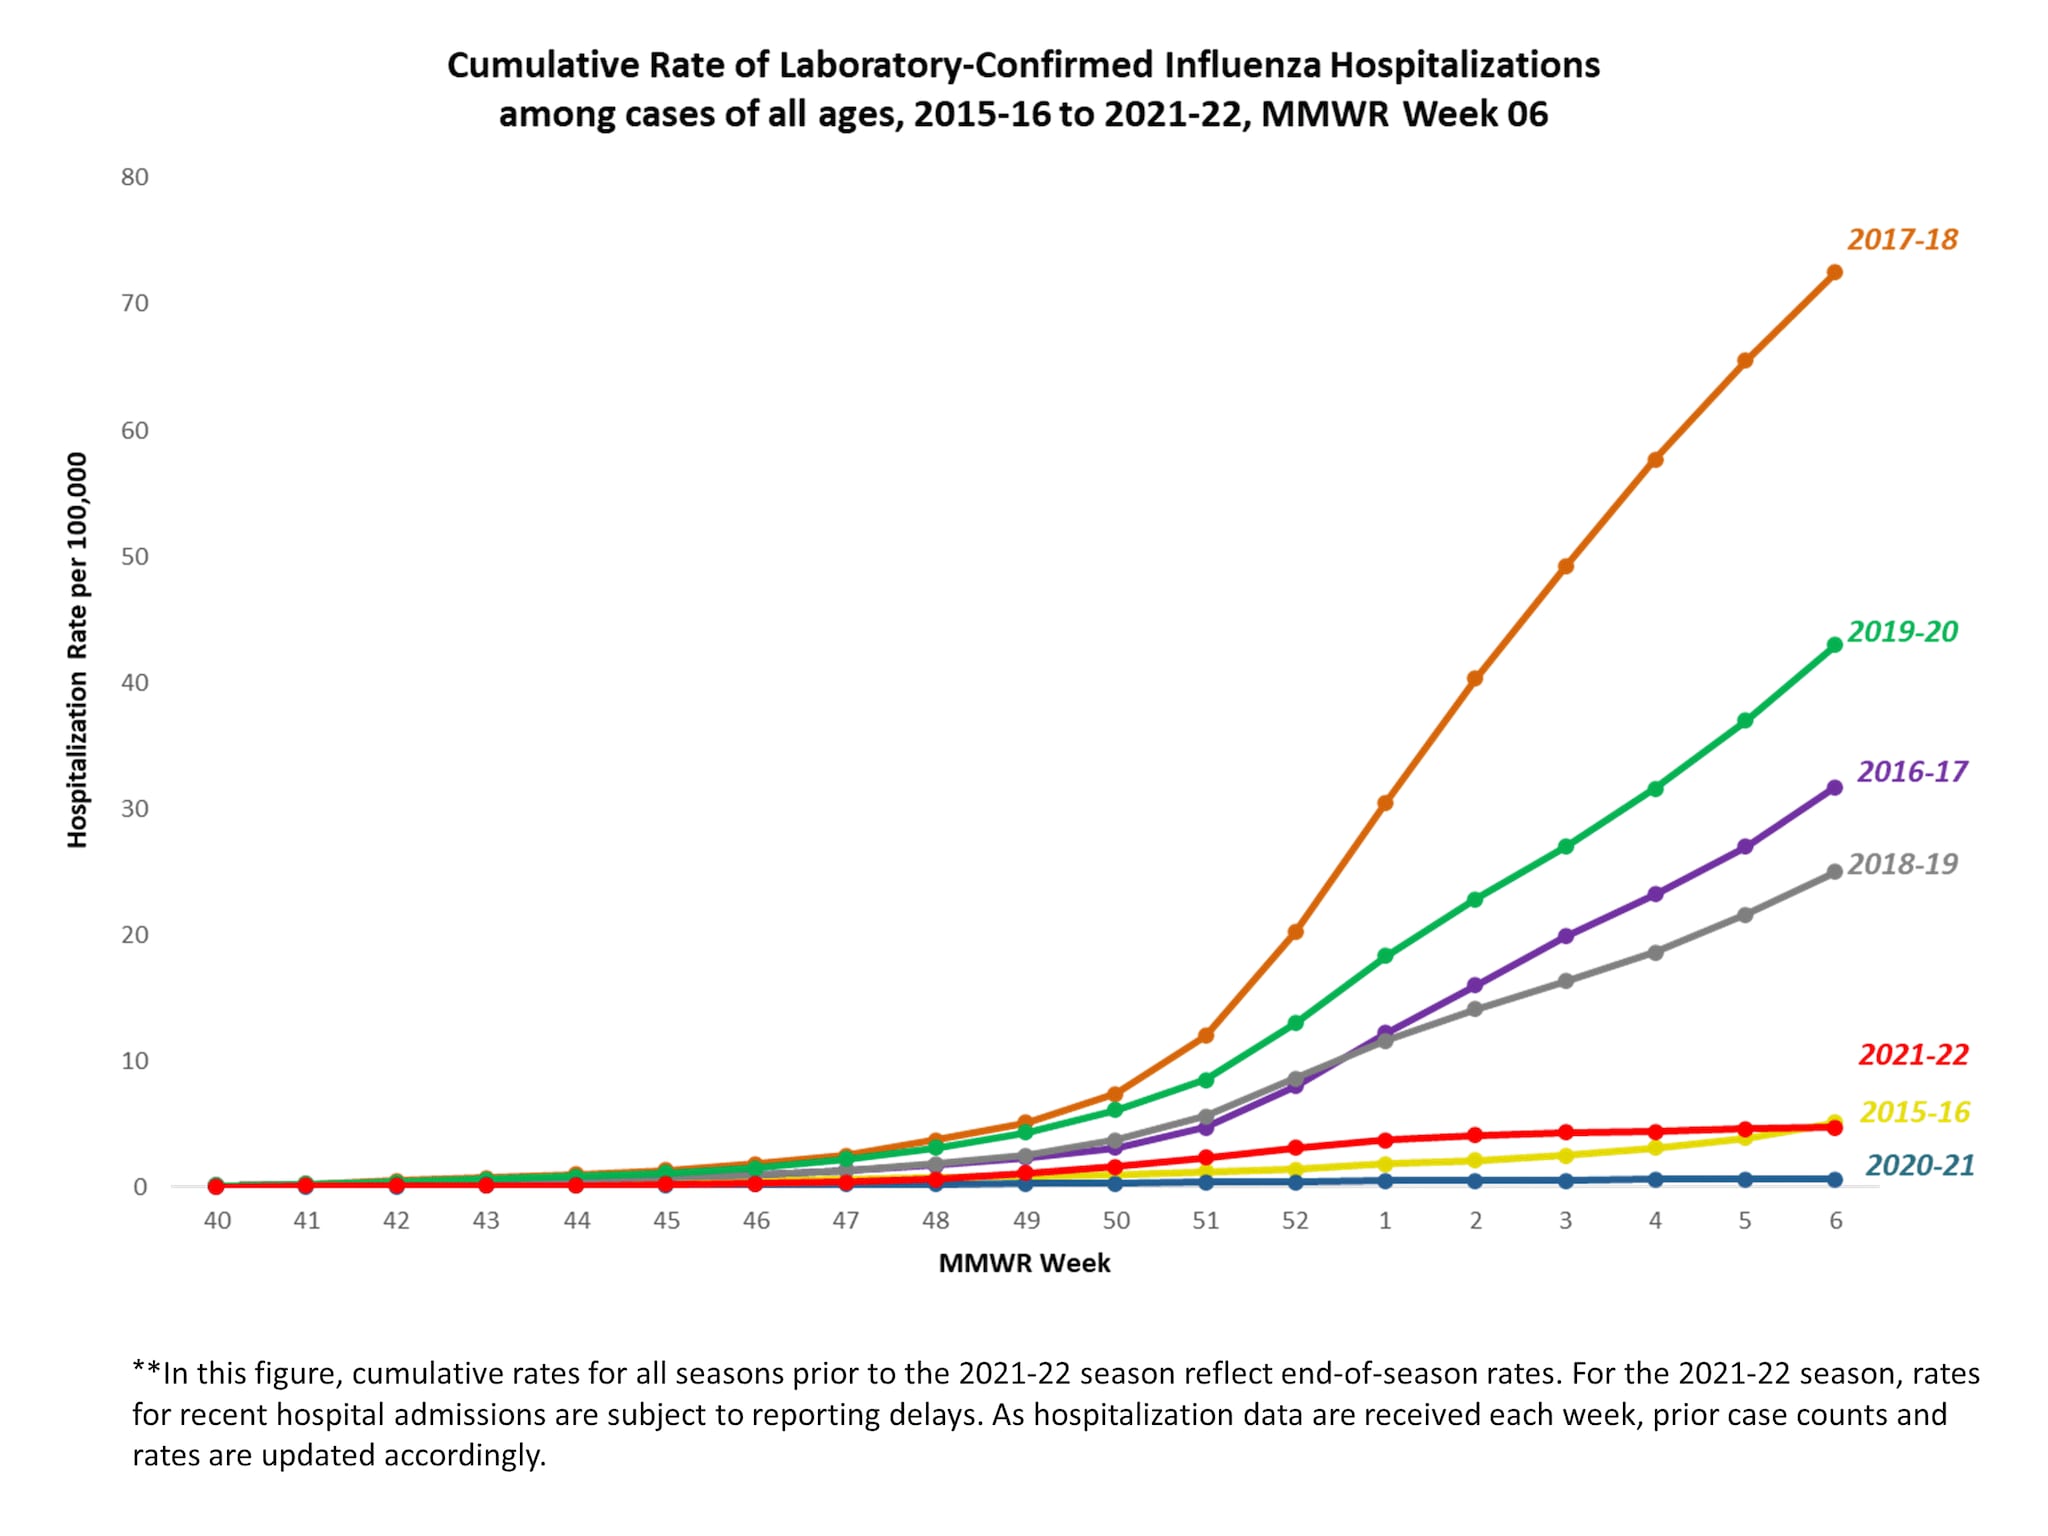 FluSurv-Net Laboratory Confirmed Cumulative Hospitalization Rates (per 100,000), Season 2021-22 Season